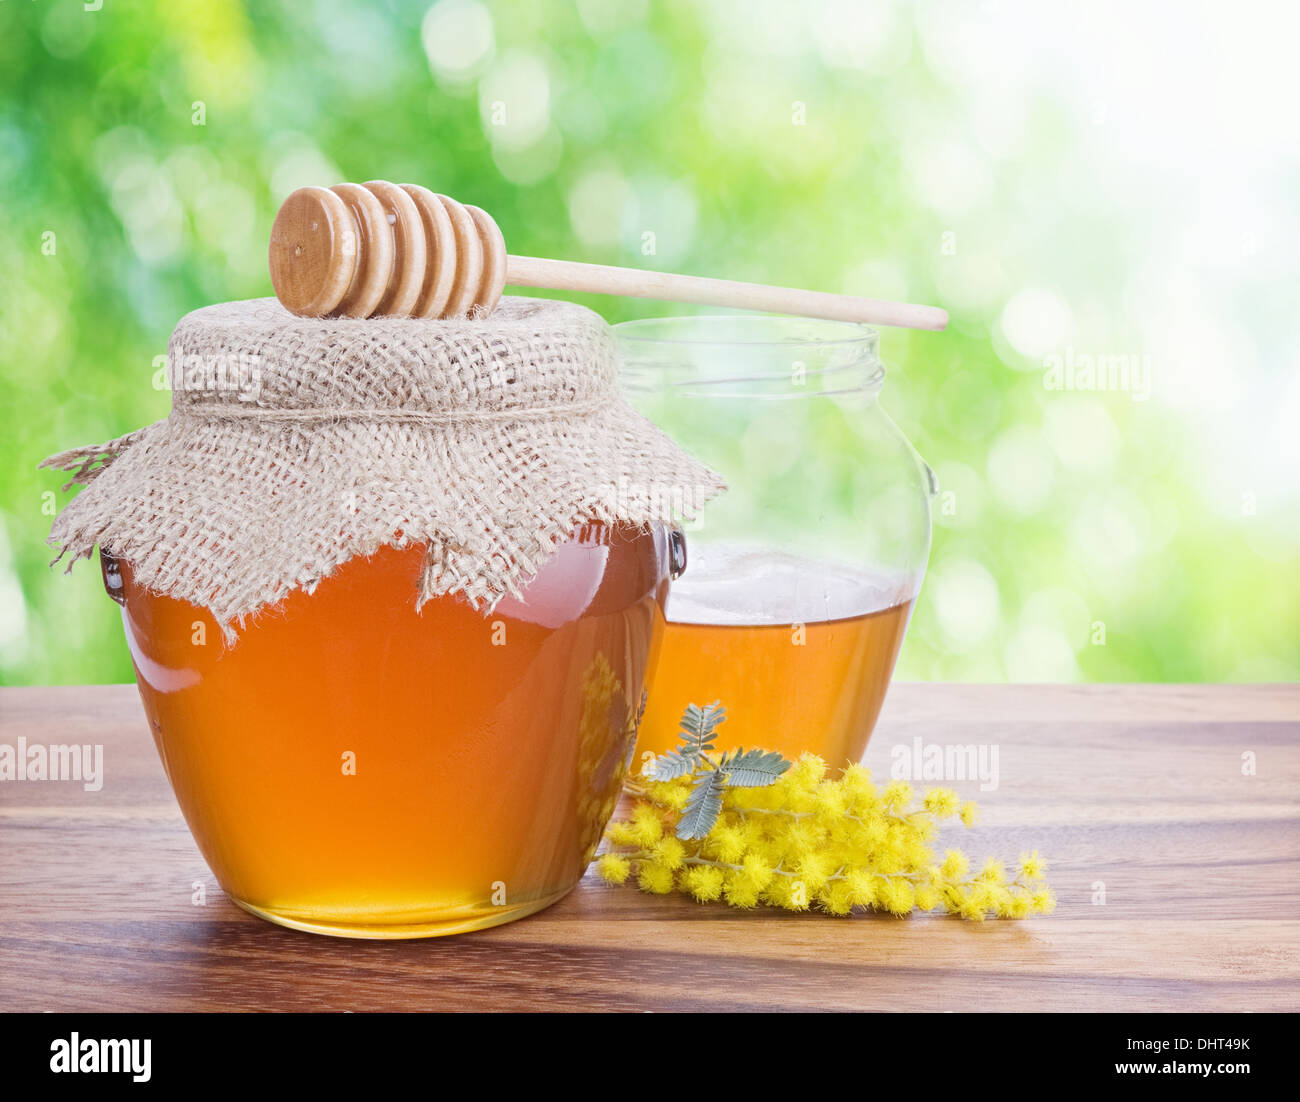 Honey in glass jars against nature bokeh background. Stock Photo